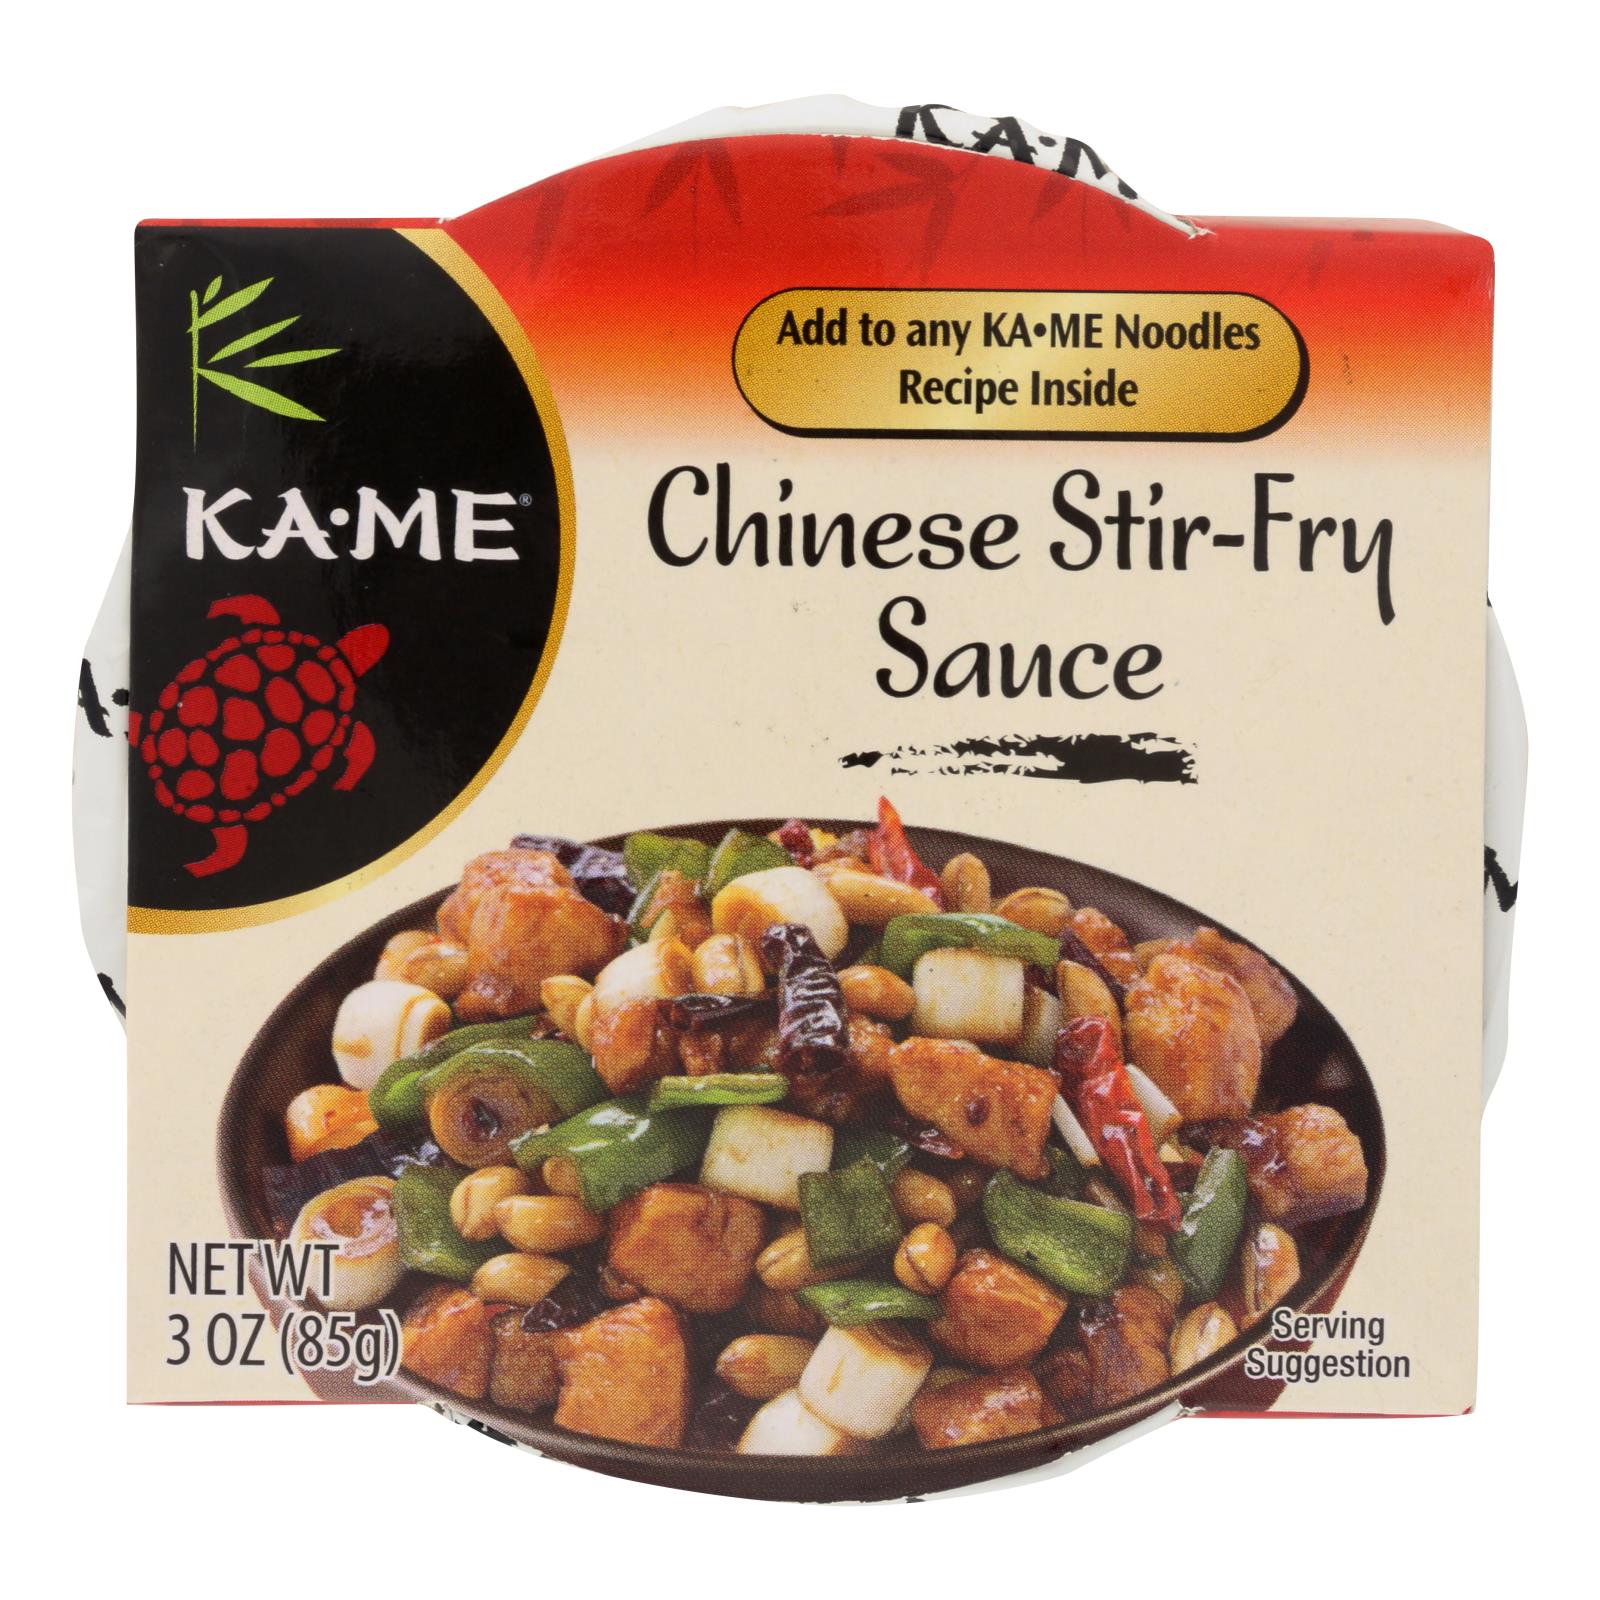 Ka-Me Chinese Stir-Fry Sauce - 10개 묶음상품 - 3 OZ